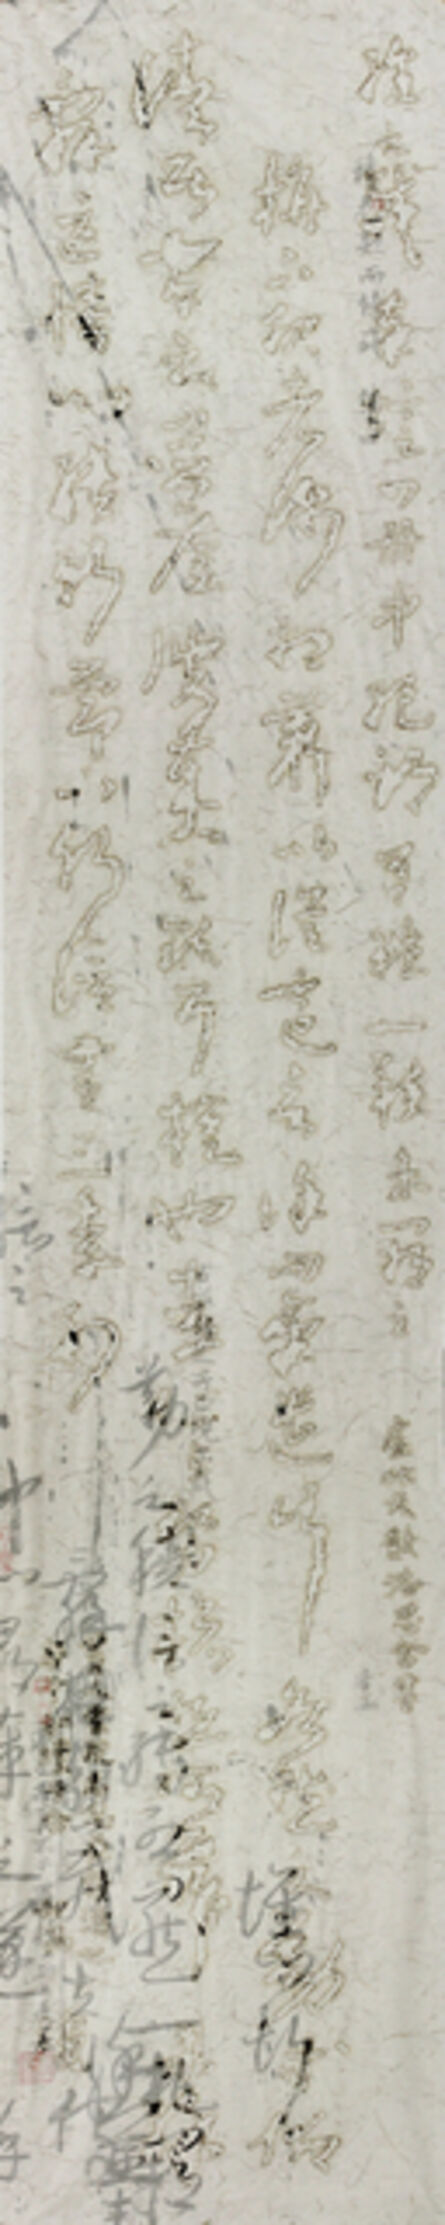 Wang Tiande 王天德, ‘HouShan Revolve-No.15-MGTH1225’, 2015